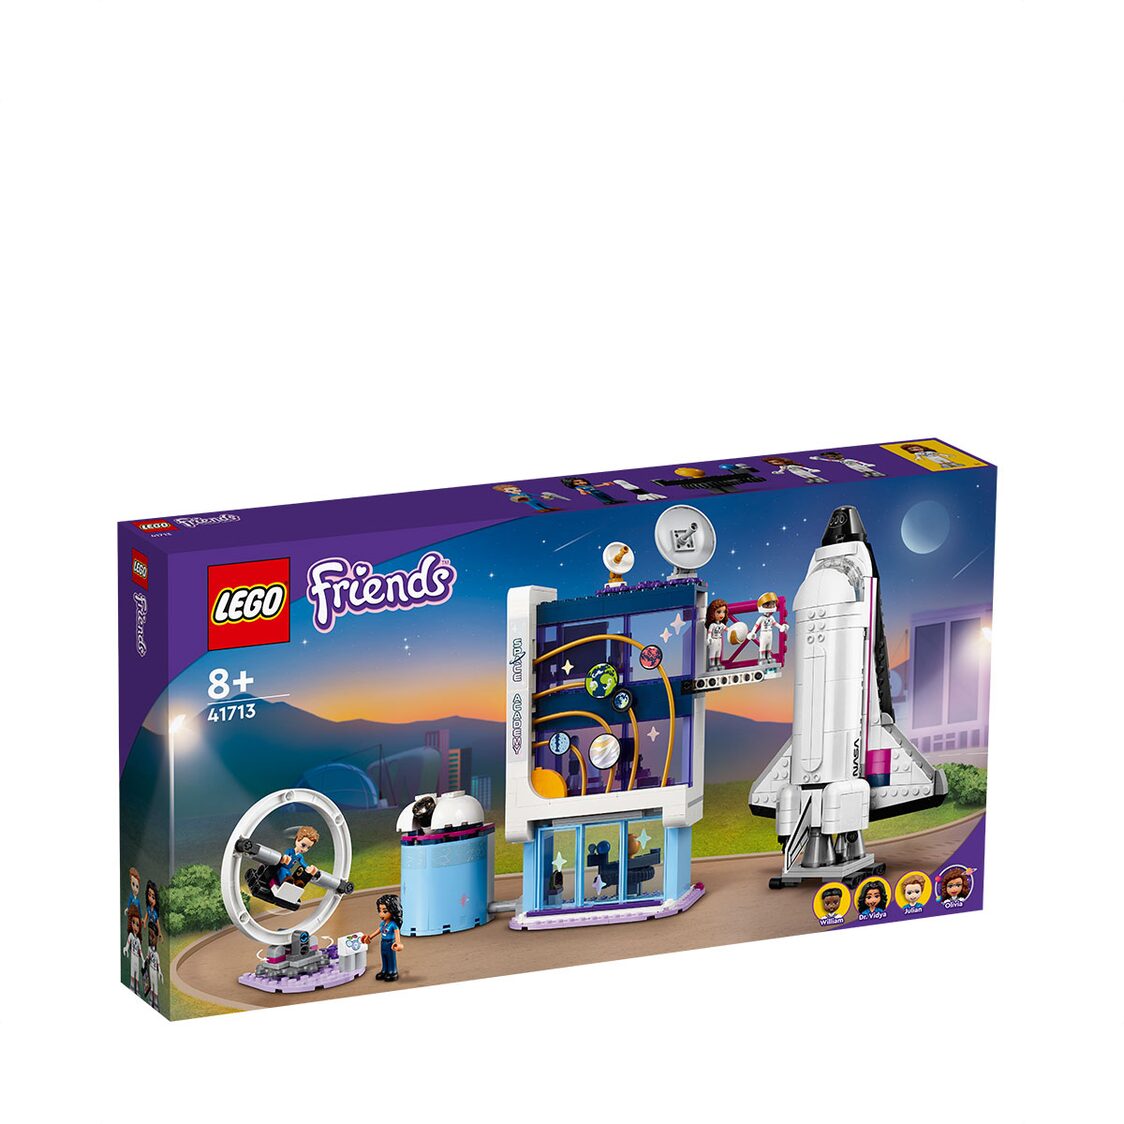 LEGO Olivias Space Academy 41713